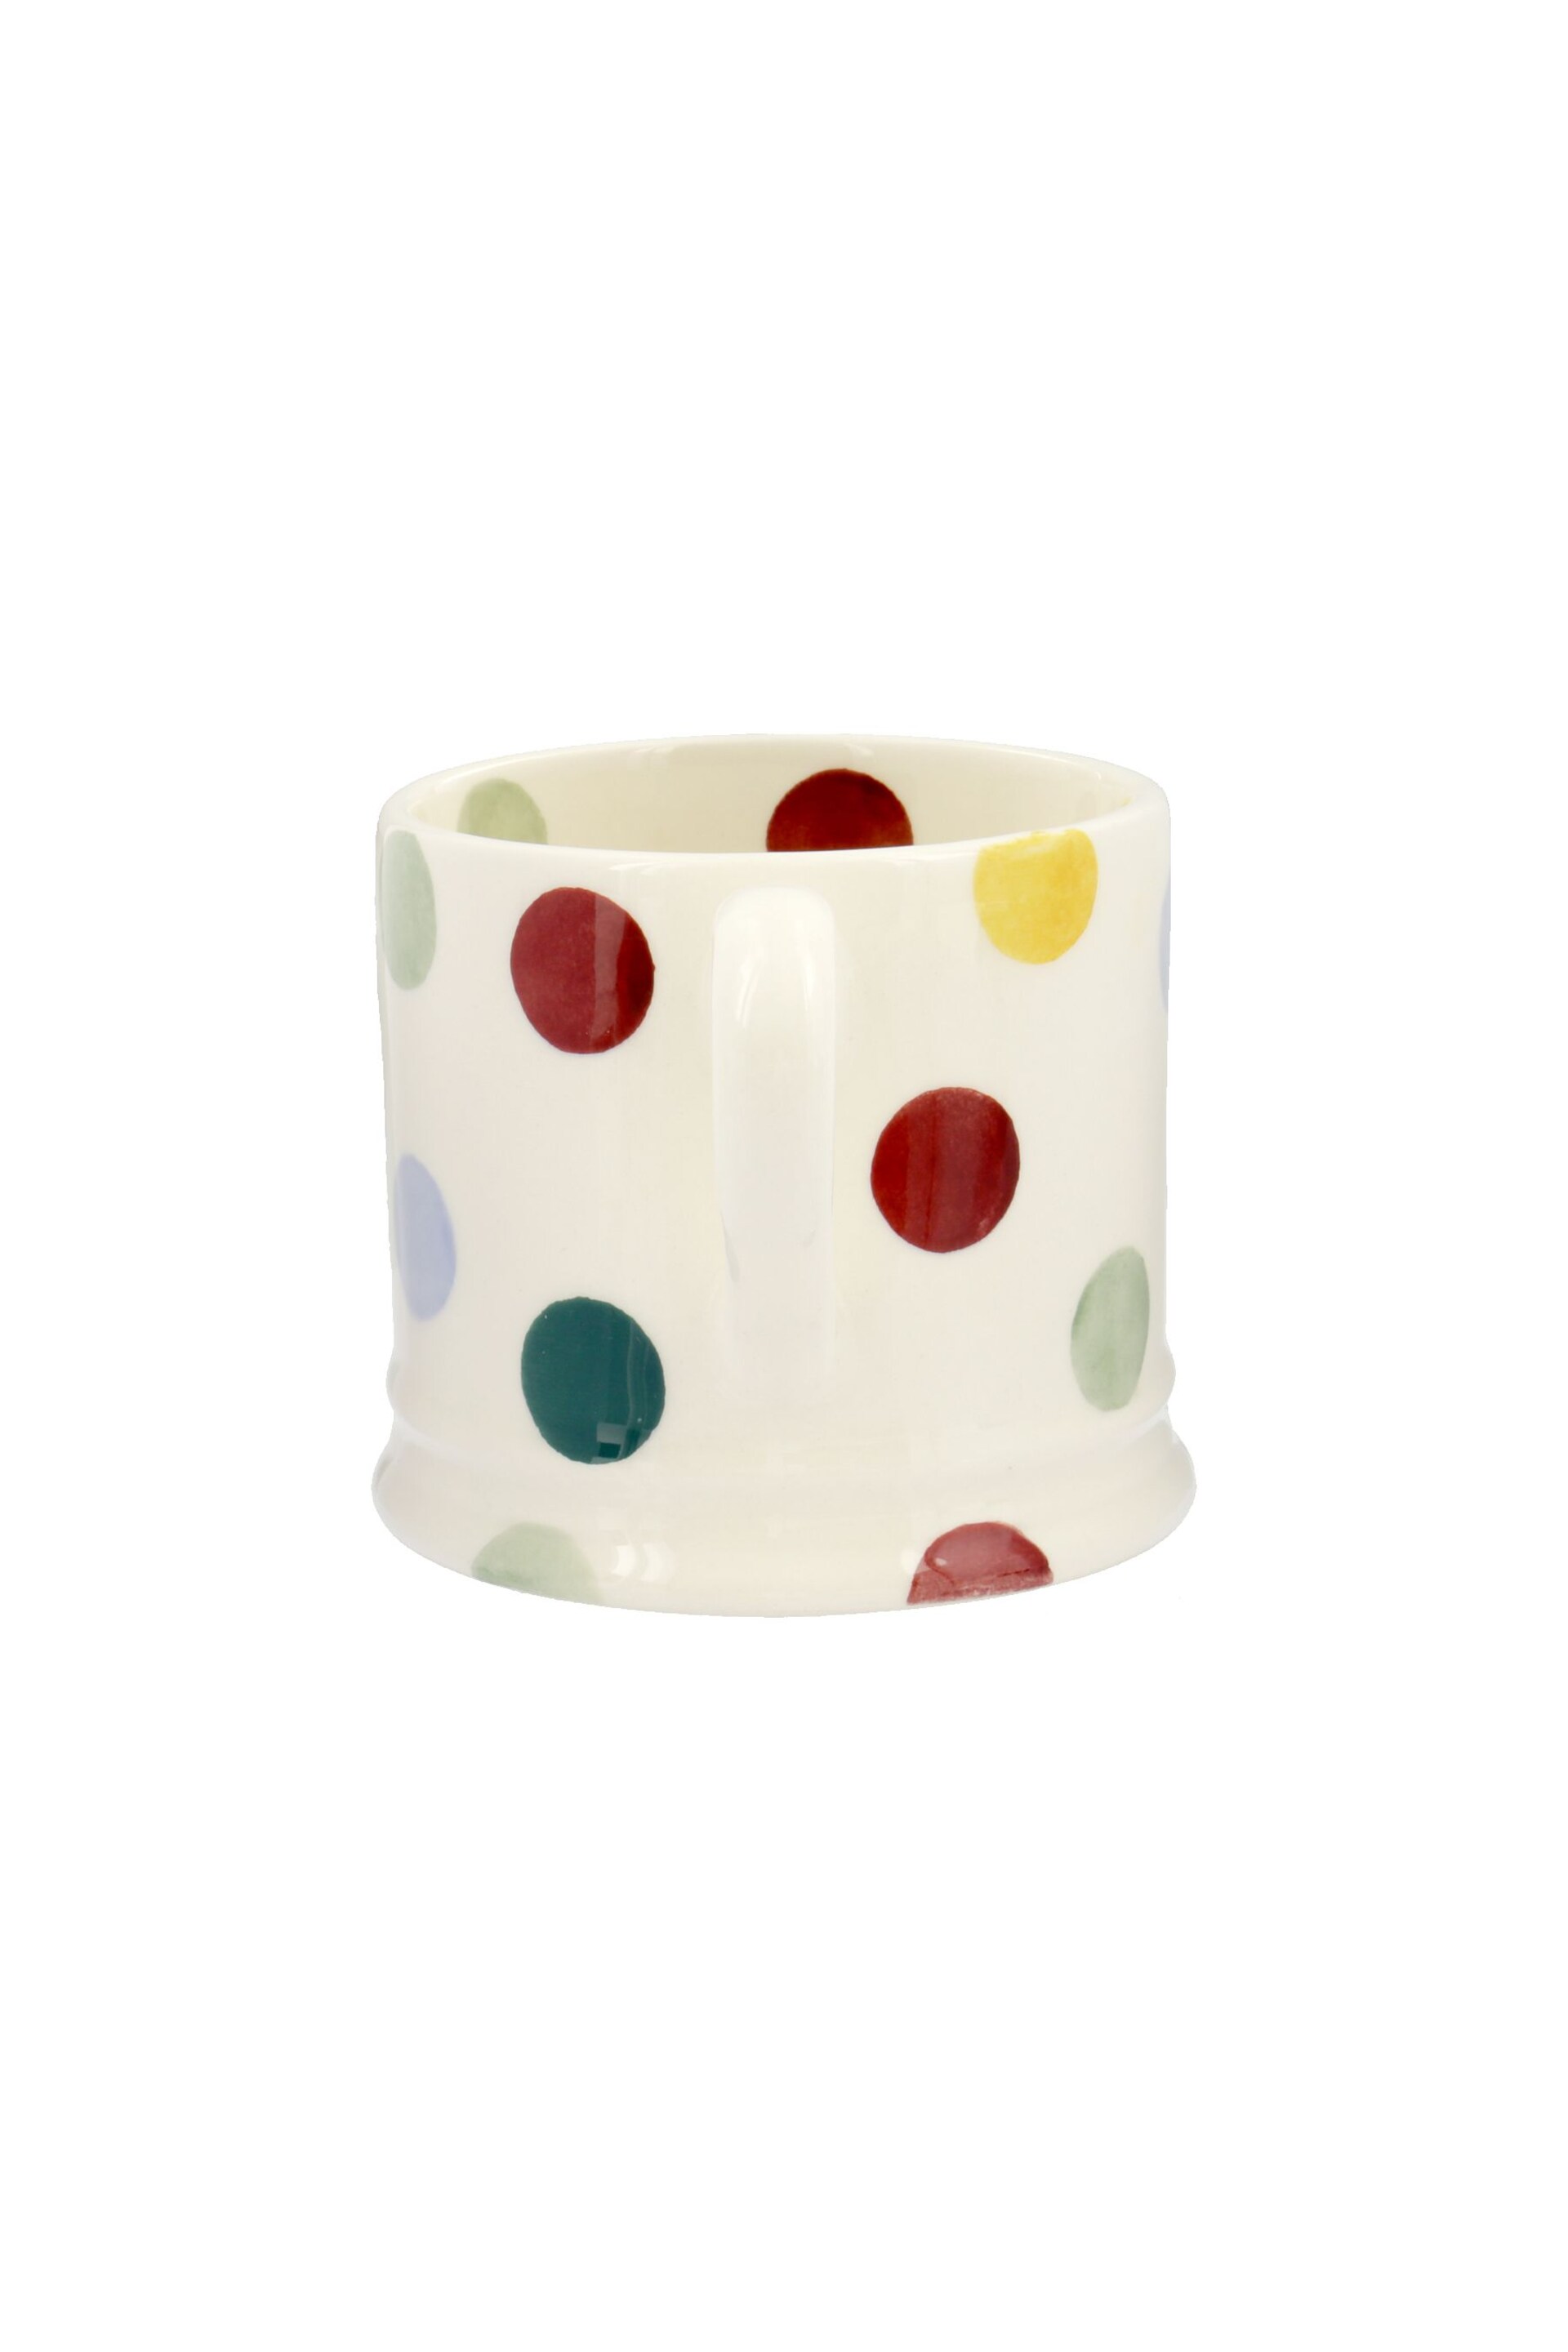 Emma Bridgewater Cream Polka Dot Small Mug - Image 3 of 4